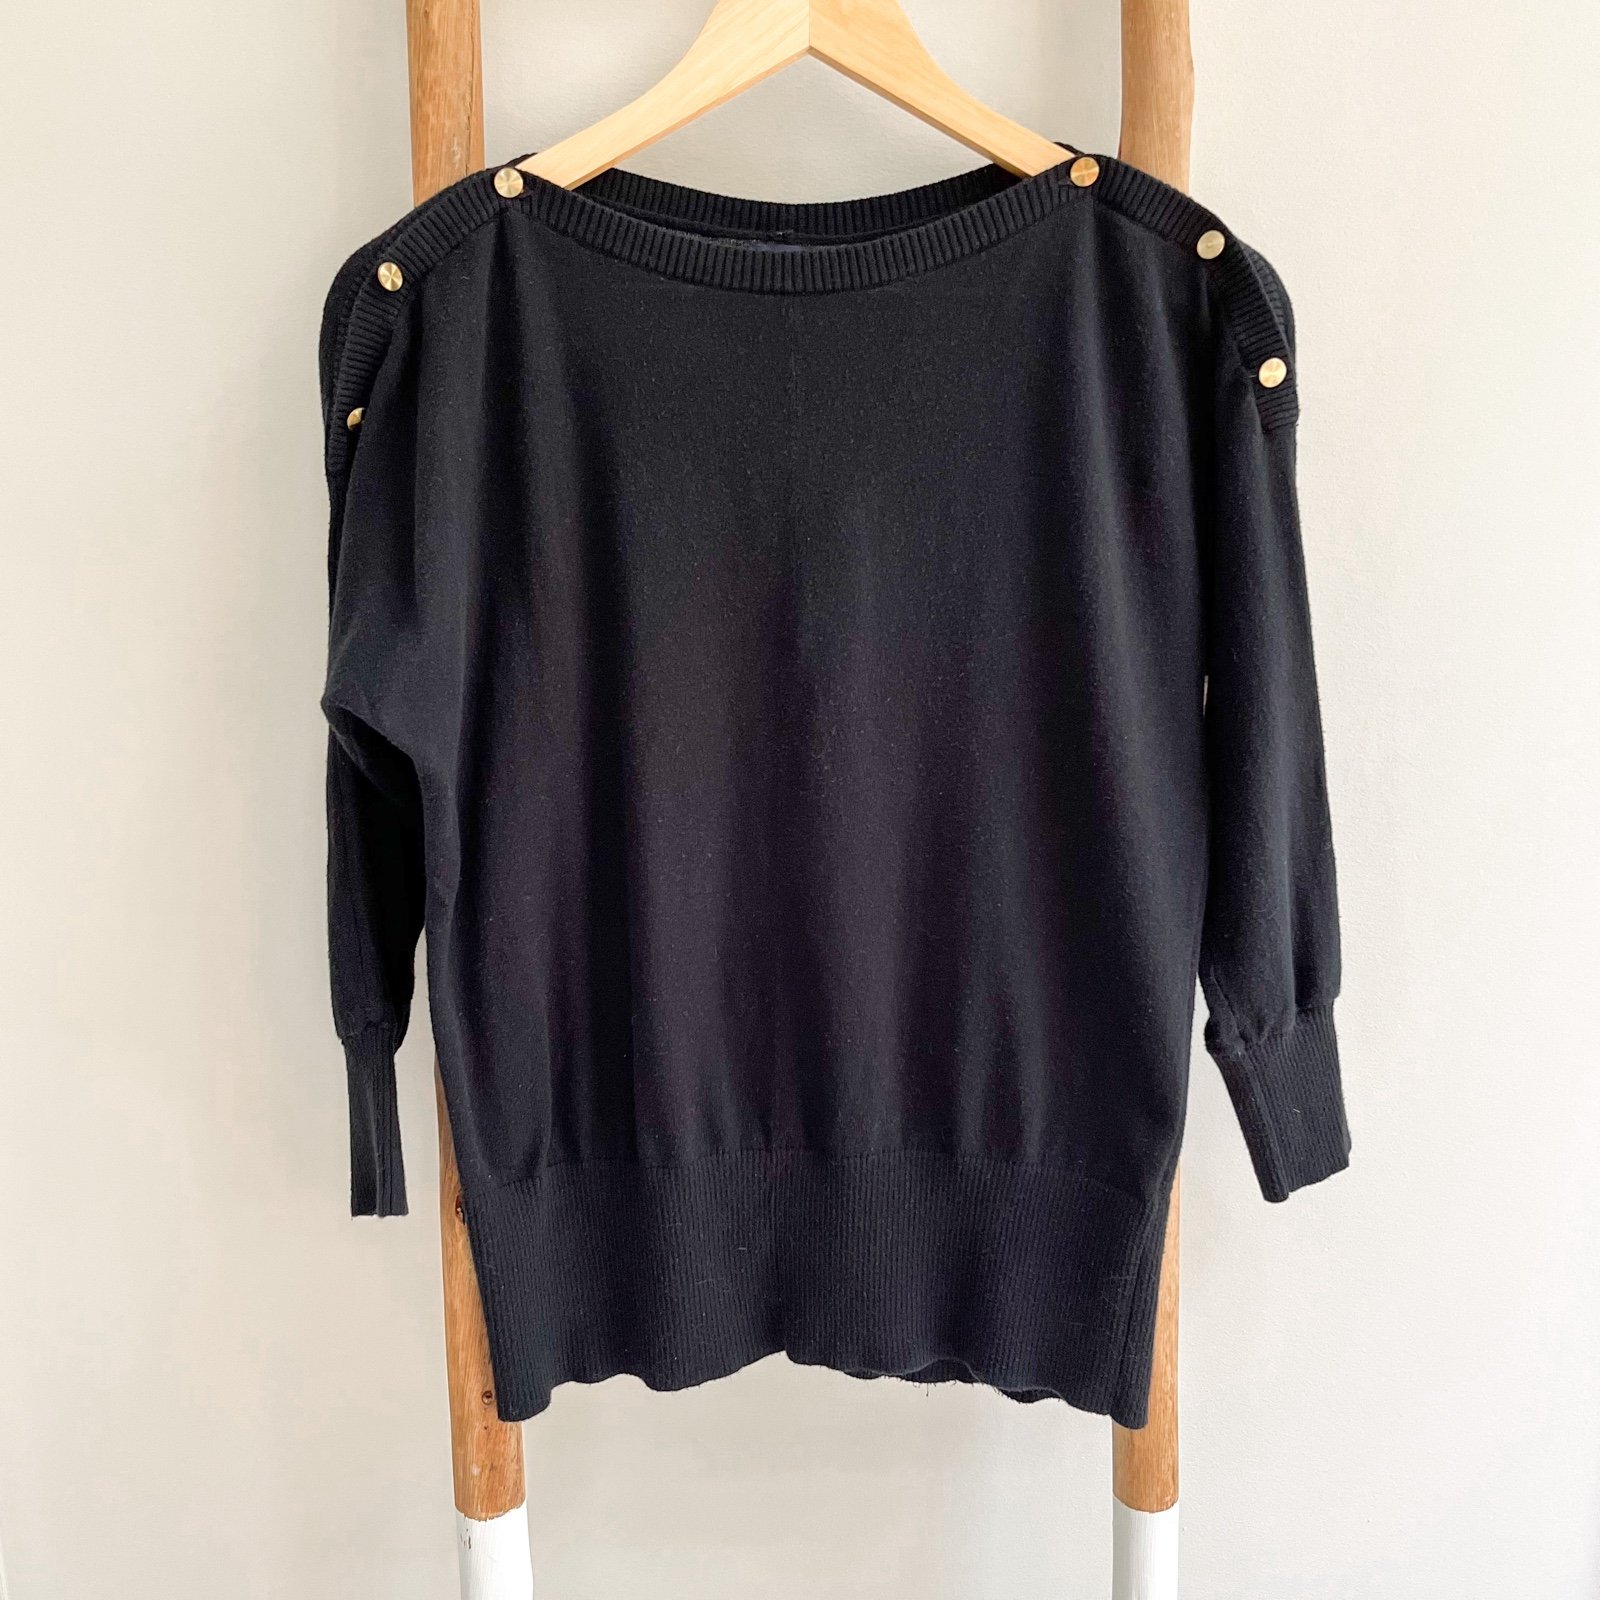 Popular [gap] combed cotton 3/4 sleeve button shoulder sweater black ogQ9SKVoy Online Shop